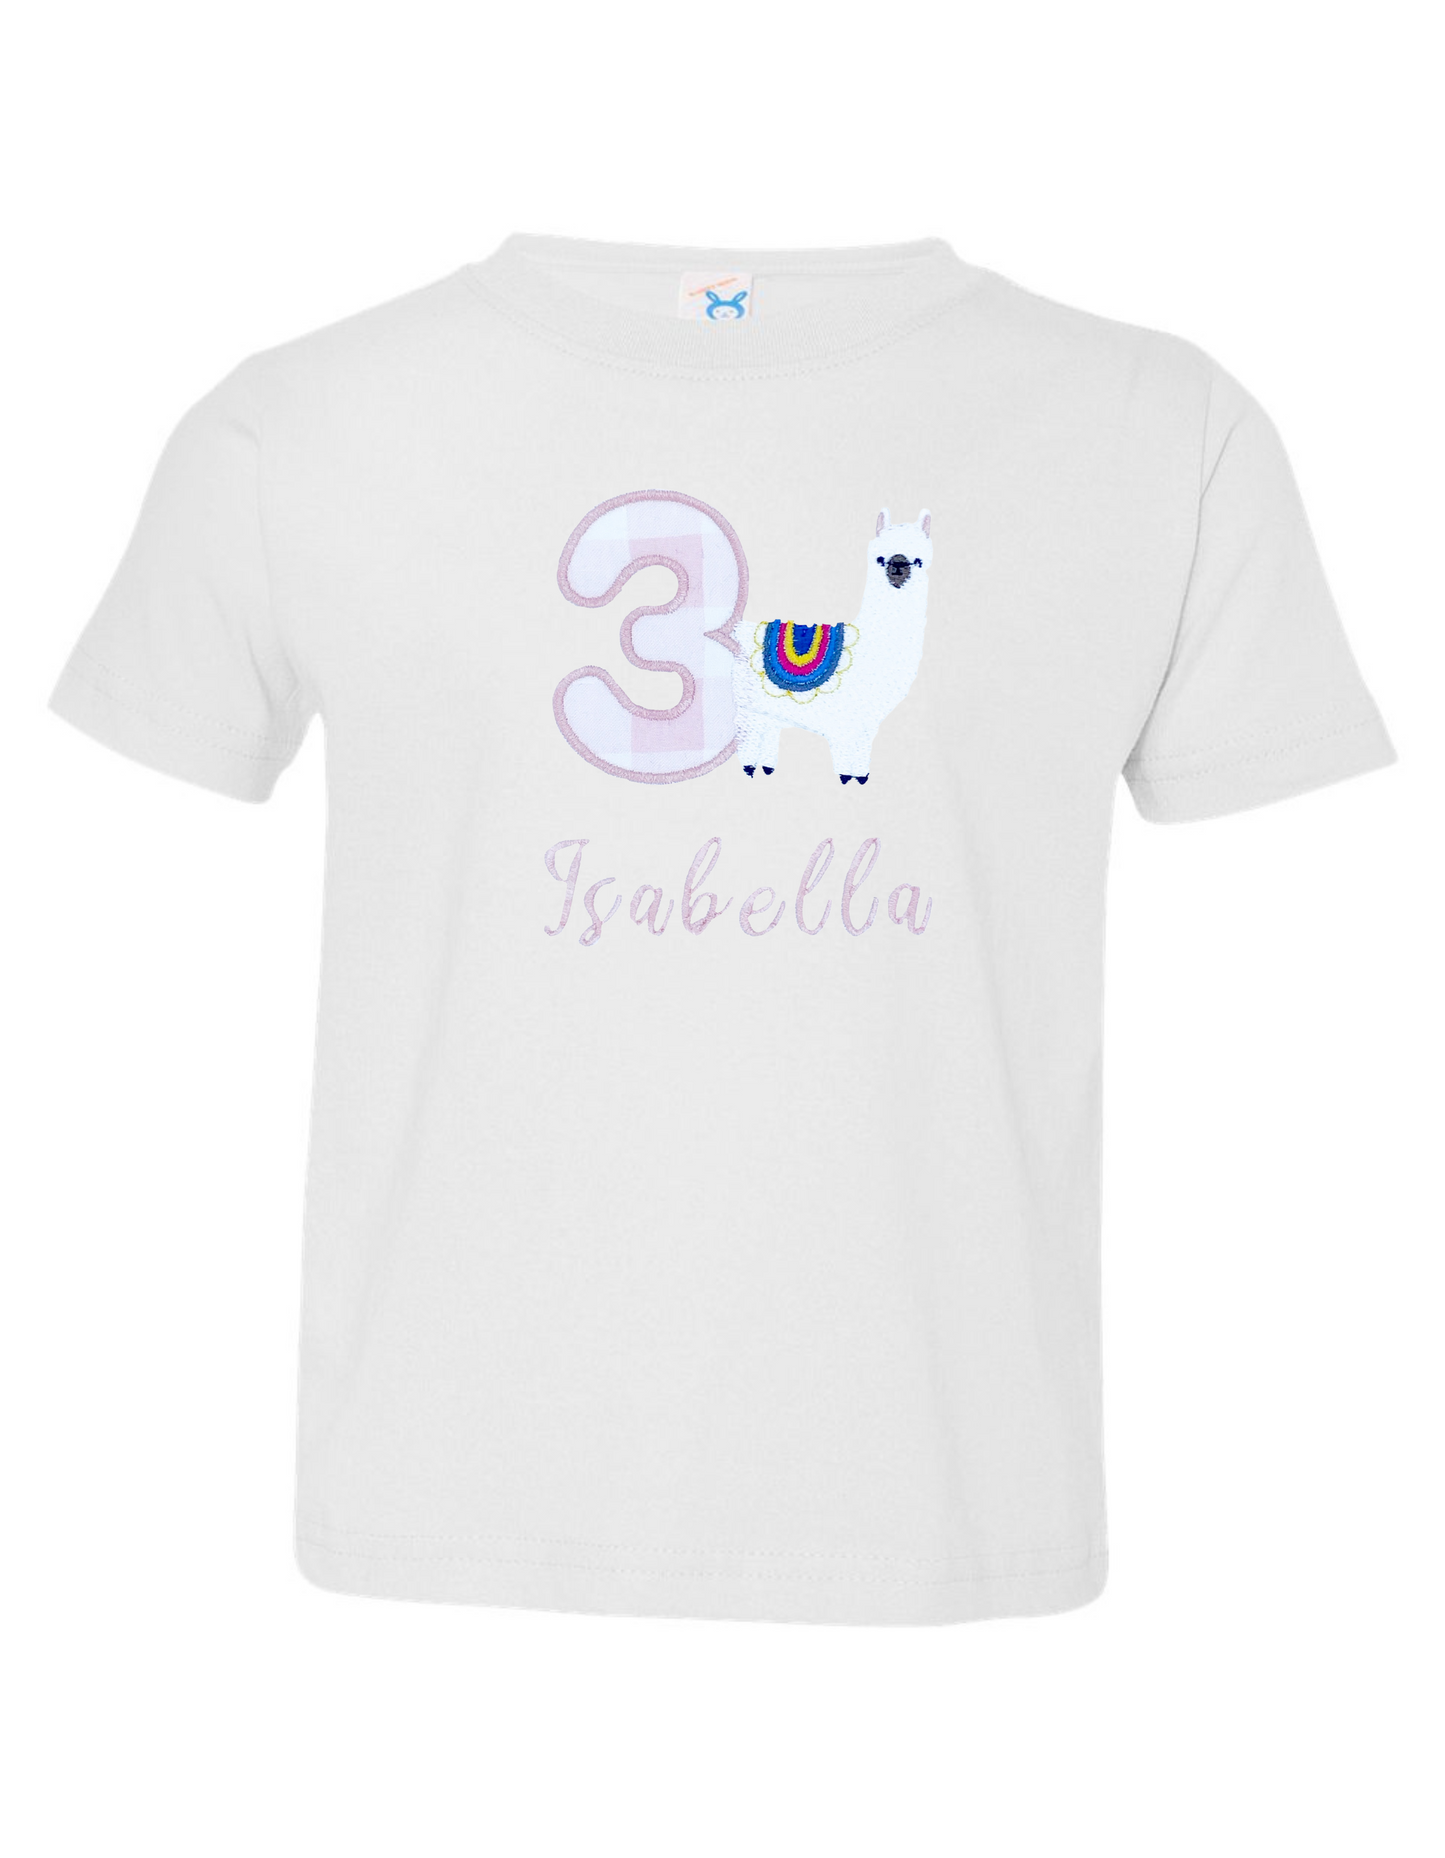 Llama Birthday T-Shirt - Embroidery